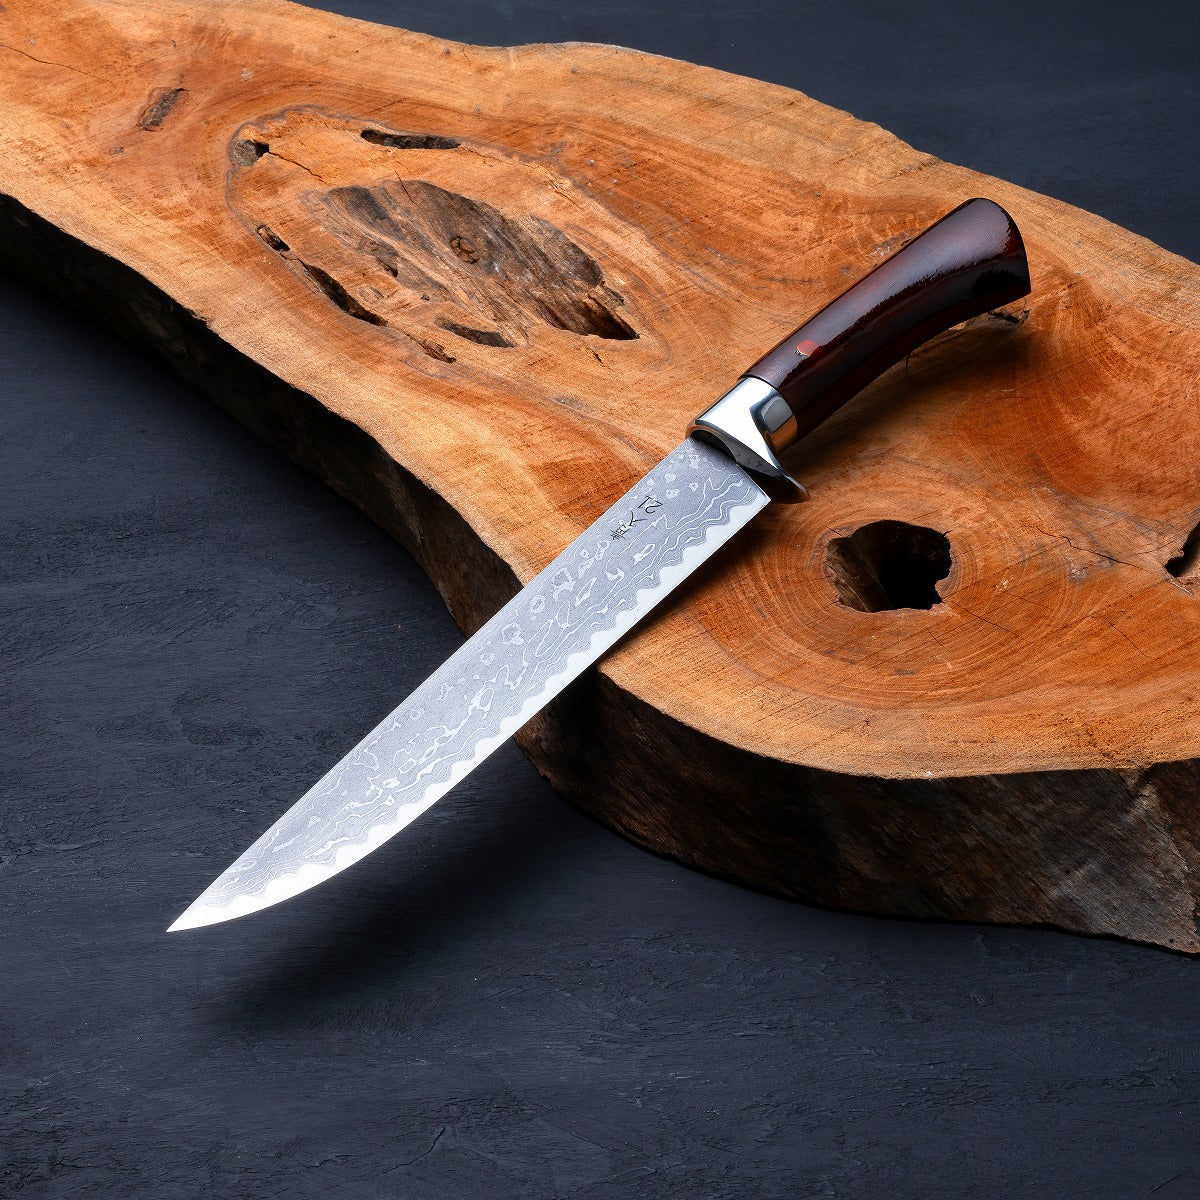 "AZUMASYUSAKU" Damascus Ranba (Wave Edge) Aogami Steel Hunting Knife